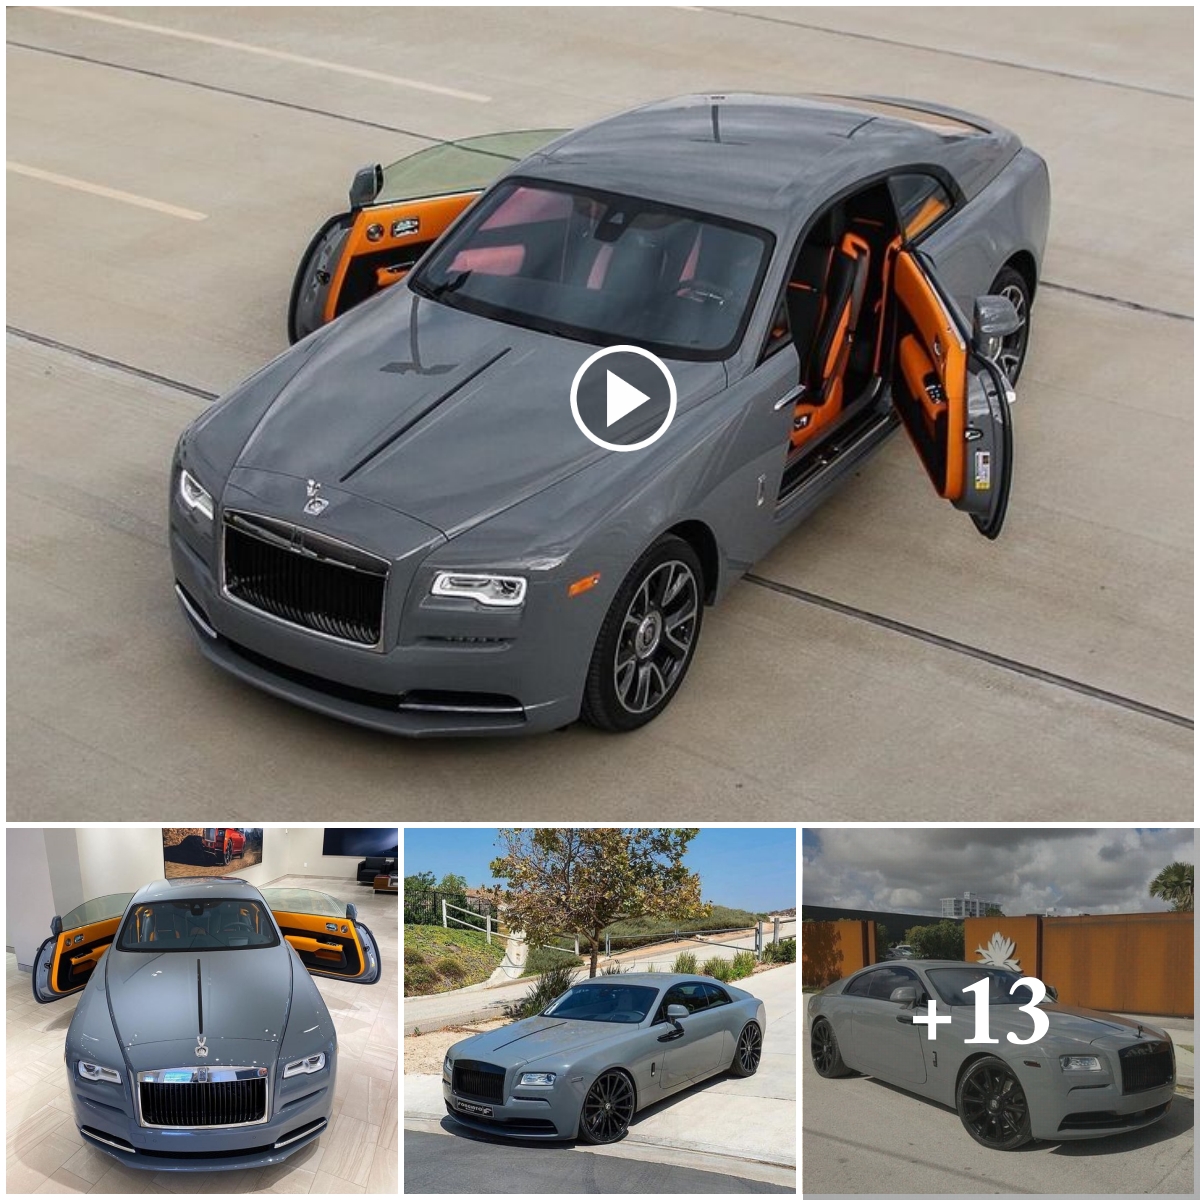 The 2020 Rolls-Royce Wraith: Burnout Grey with Mandarin Interior